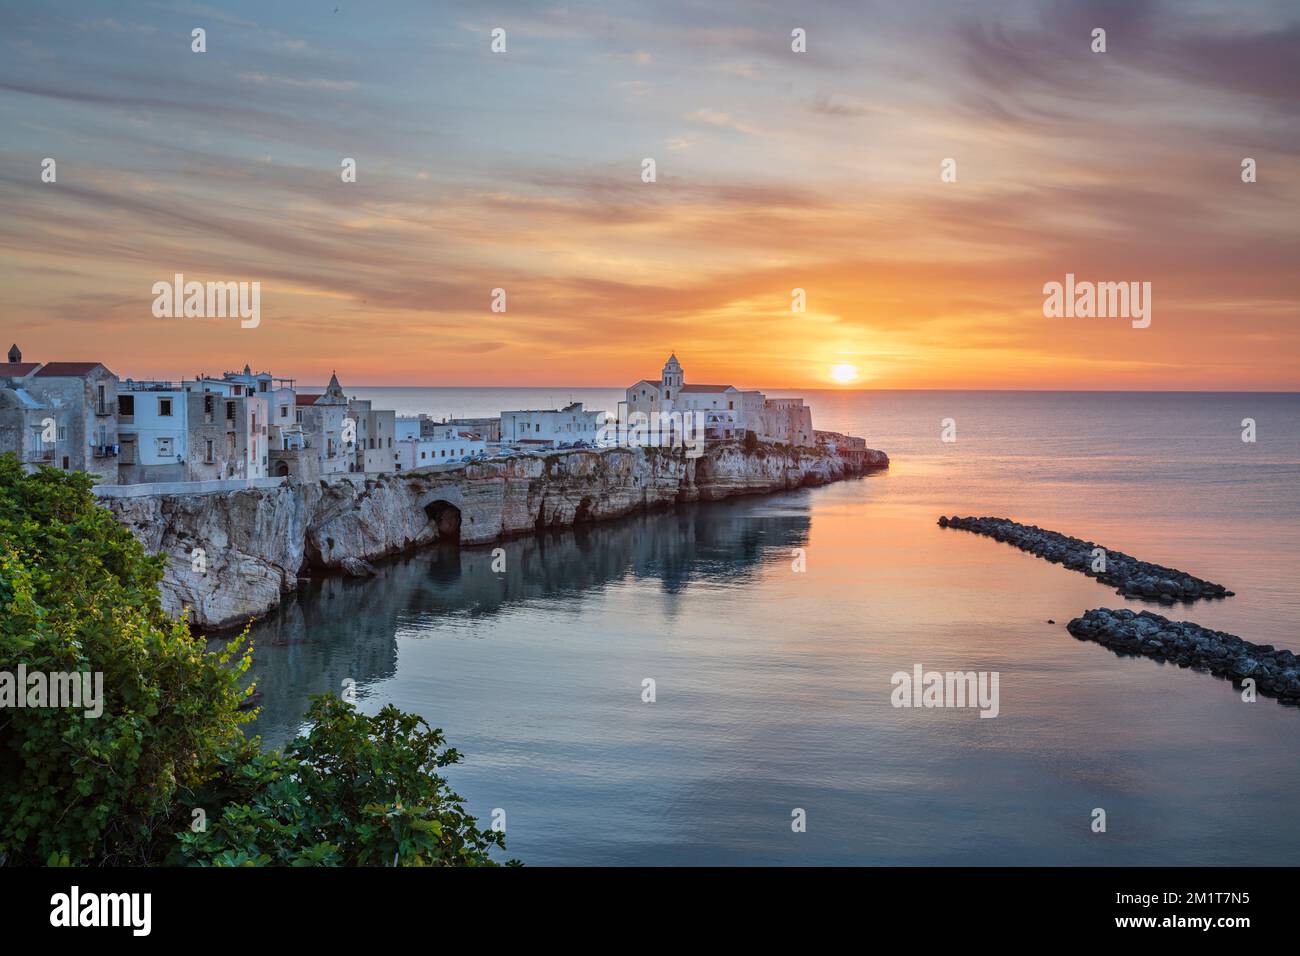 The old town on the promontory at sunrise, Vieste, Gargano peninsula, Foggia province, Puglia, Italy, Europe Stock Photo